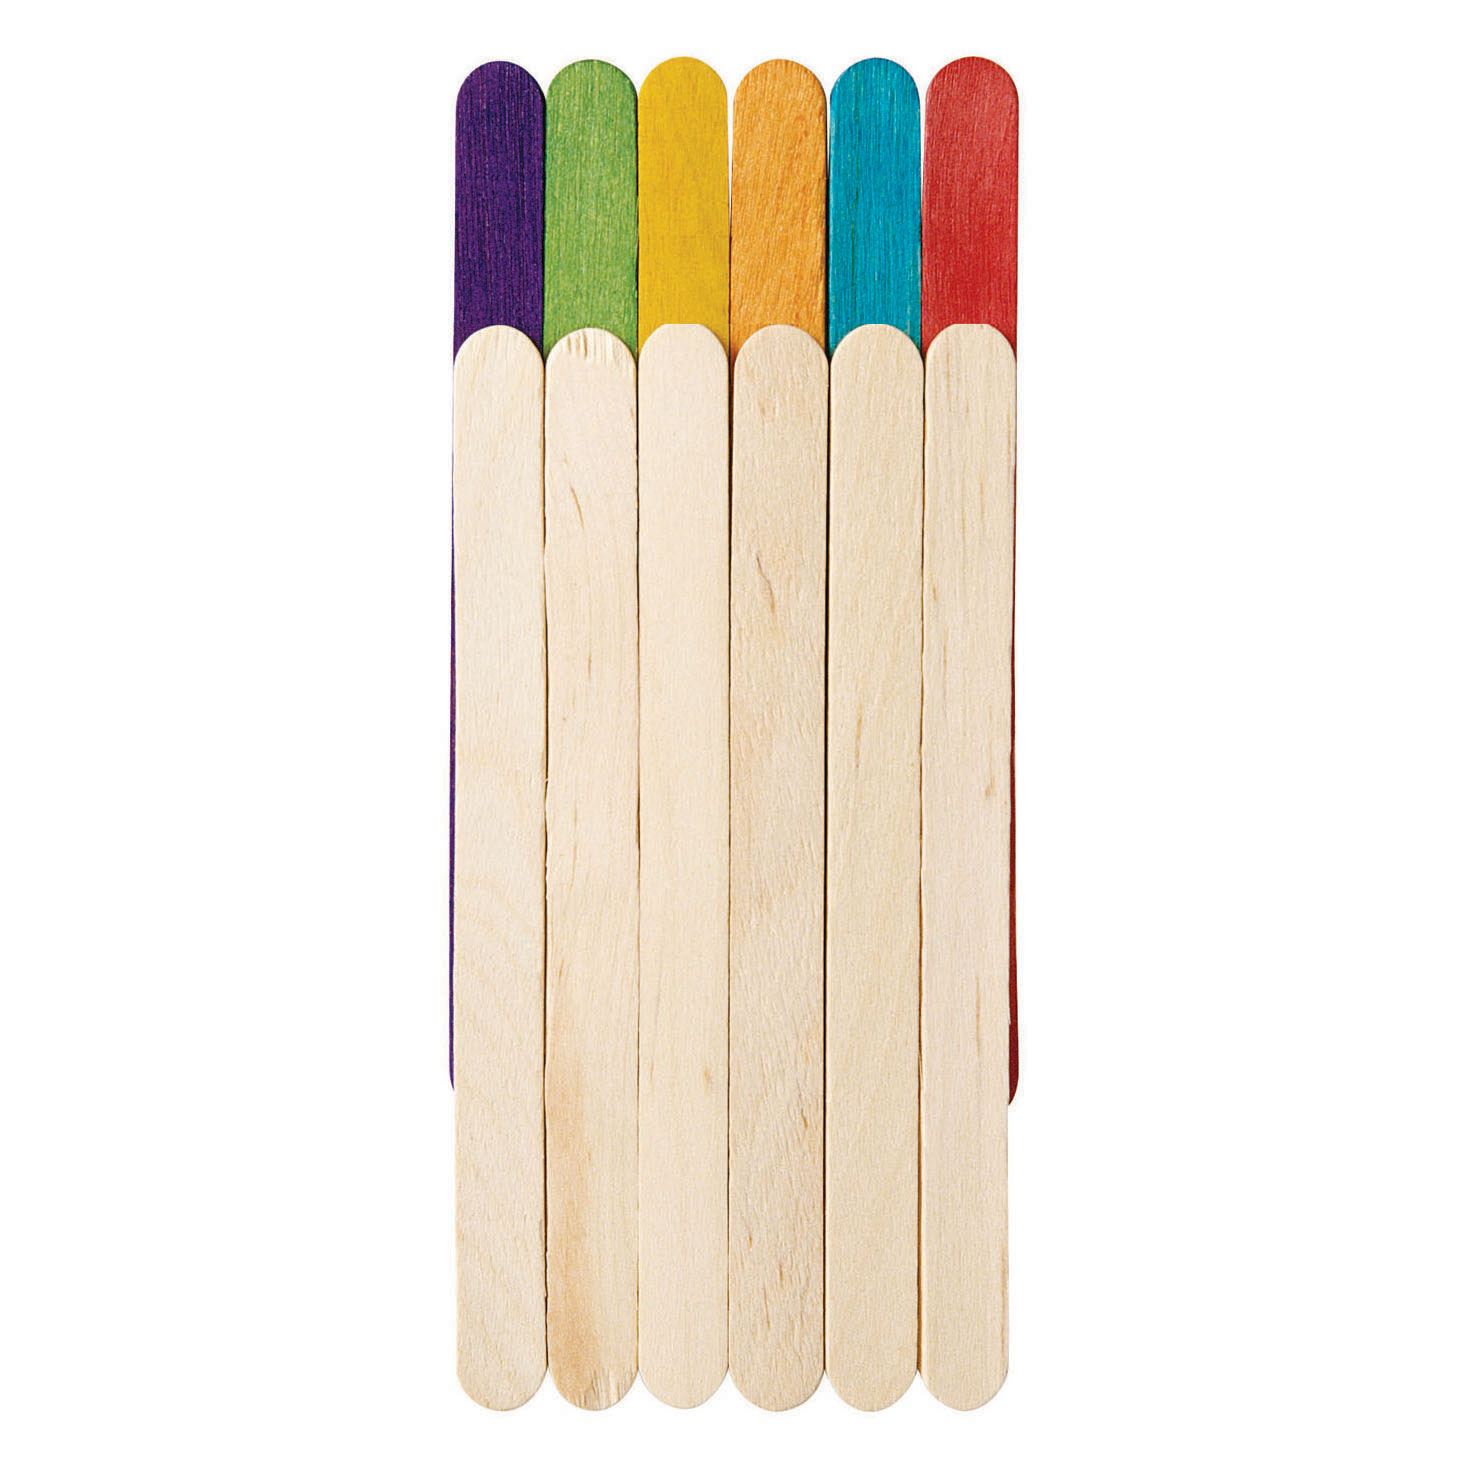 Colorations - Farbige Bastelstäbchen aus Holz, 1000 Stück.